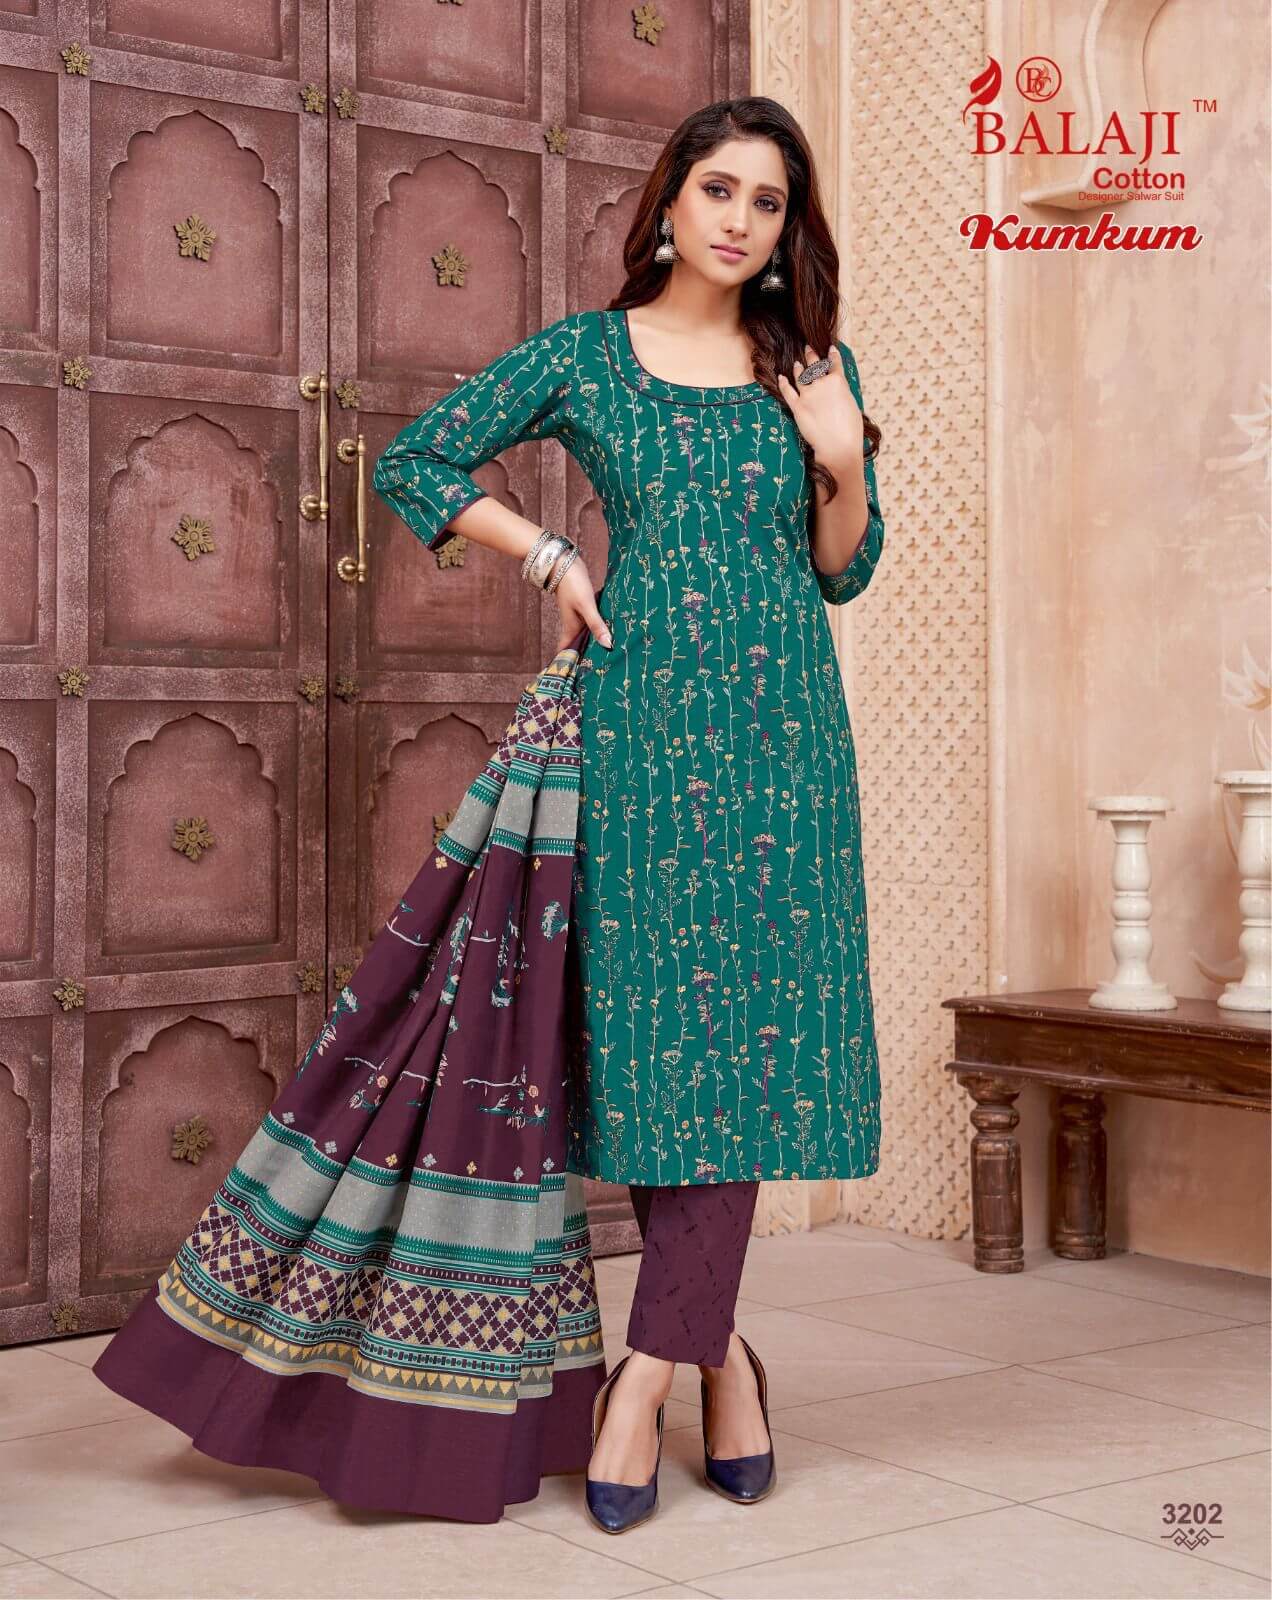 Balaji Cotton Kumkum Vol 32 A Readymade Dress collection 4